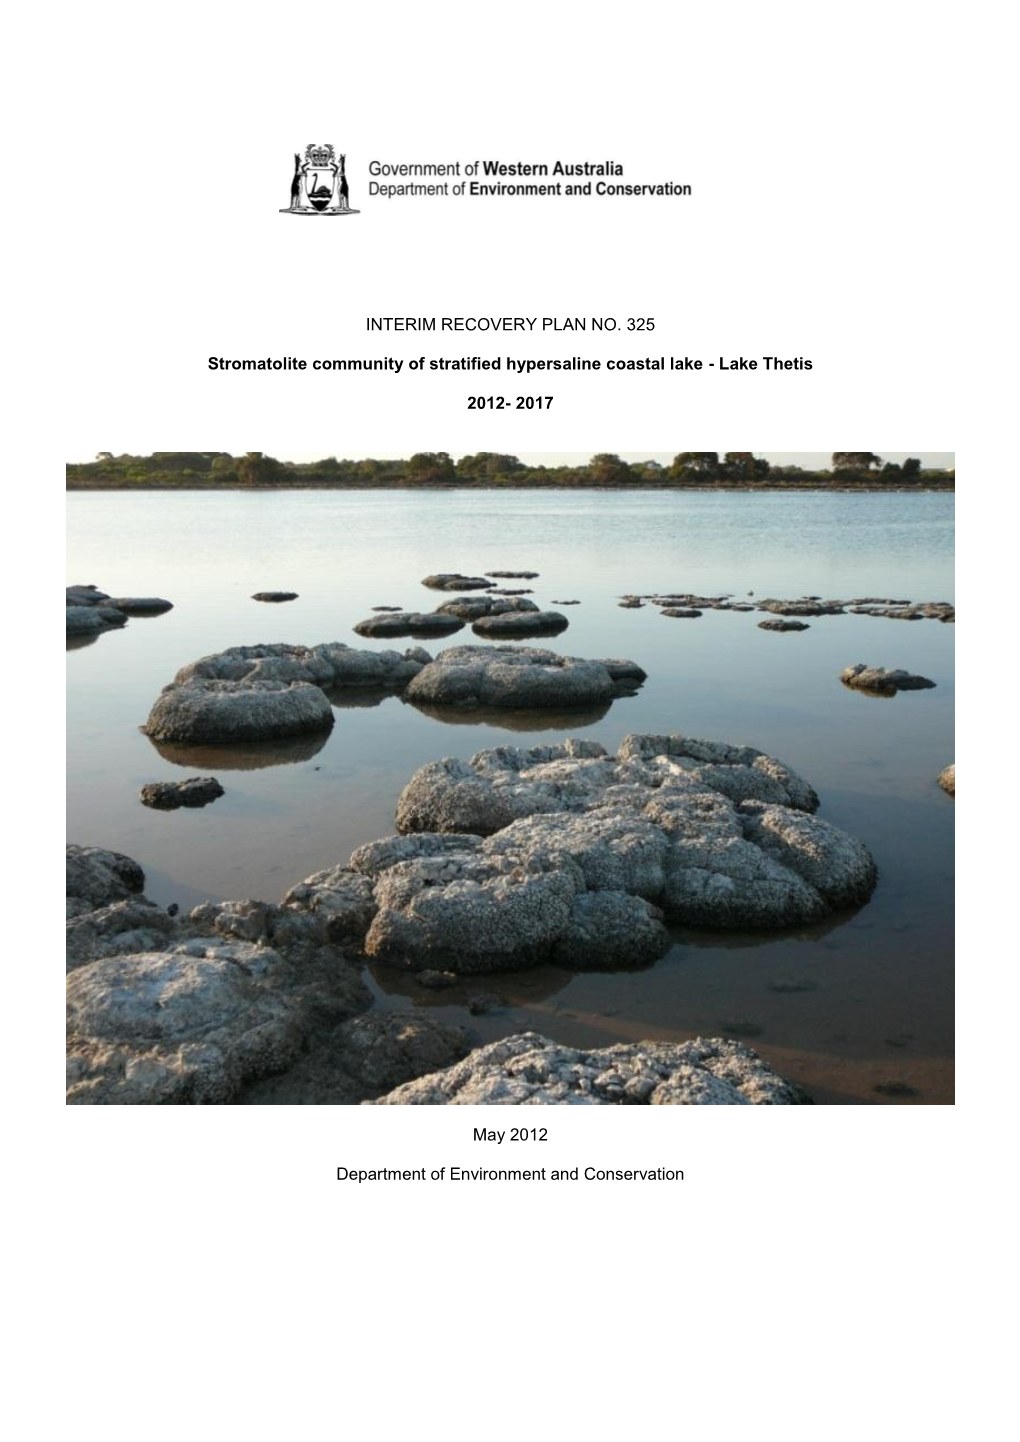 Stromatolite Community of Stratified Hypersaline Coastal Lake - Lake Thetis